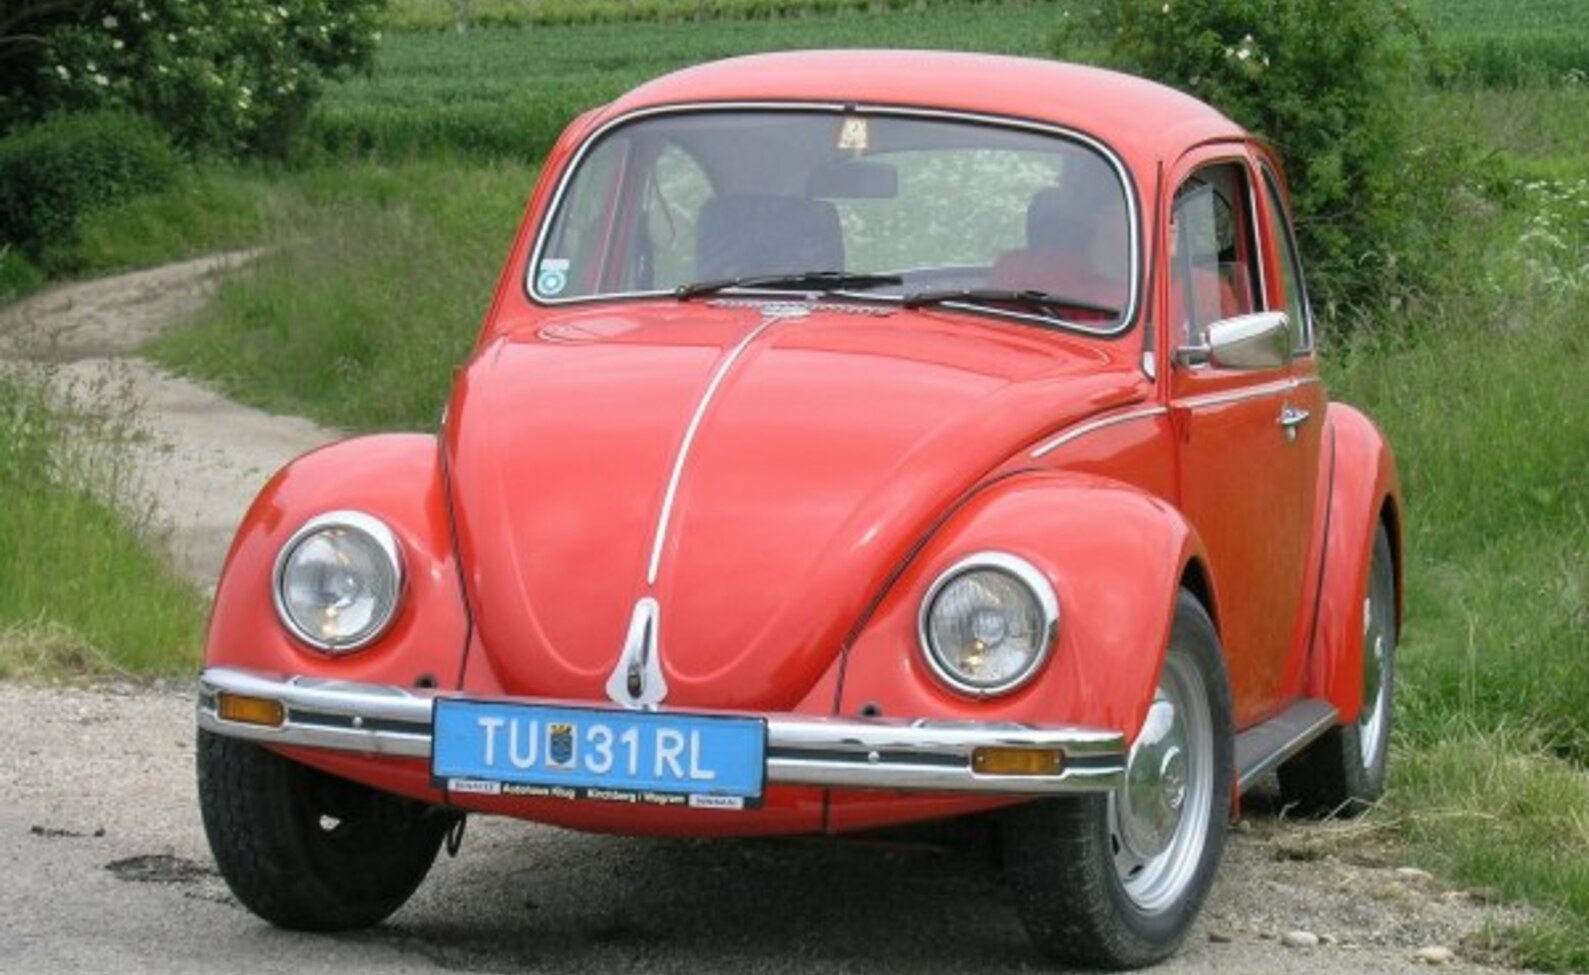 Volkswagen Kaefer 1200 1.2 (11) (34 Hp) 1960, 1961, 1962, 1963, 1964, 1965, 1966, 1967, 1968, 1969, 1970, 1971, 1972, 1973, 1974, 1975, 1976, 1977, 1978, 1979, 1980, 1981, 1982, 1983, 1984, 1985 